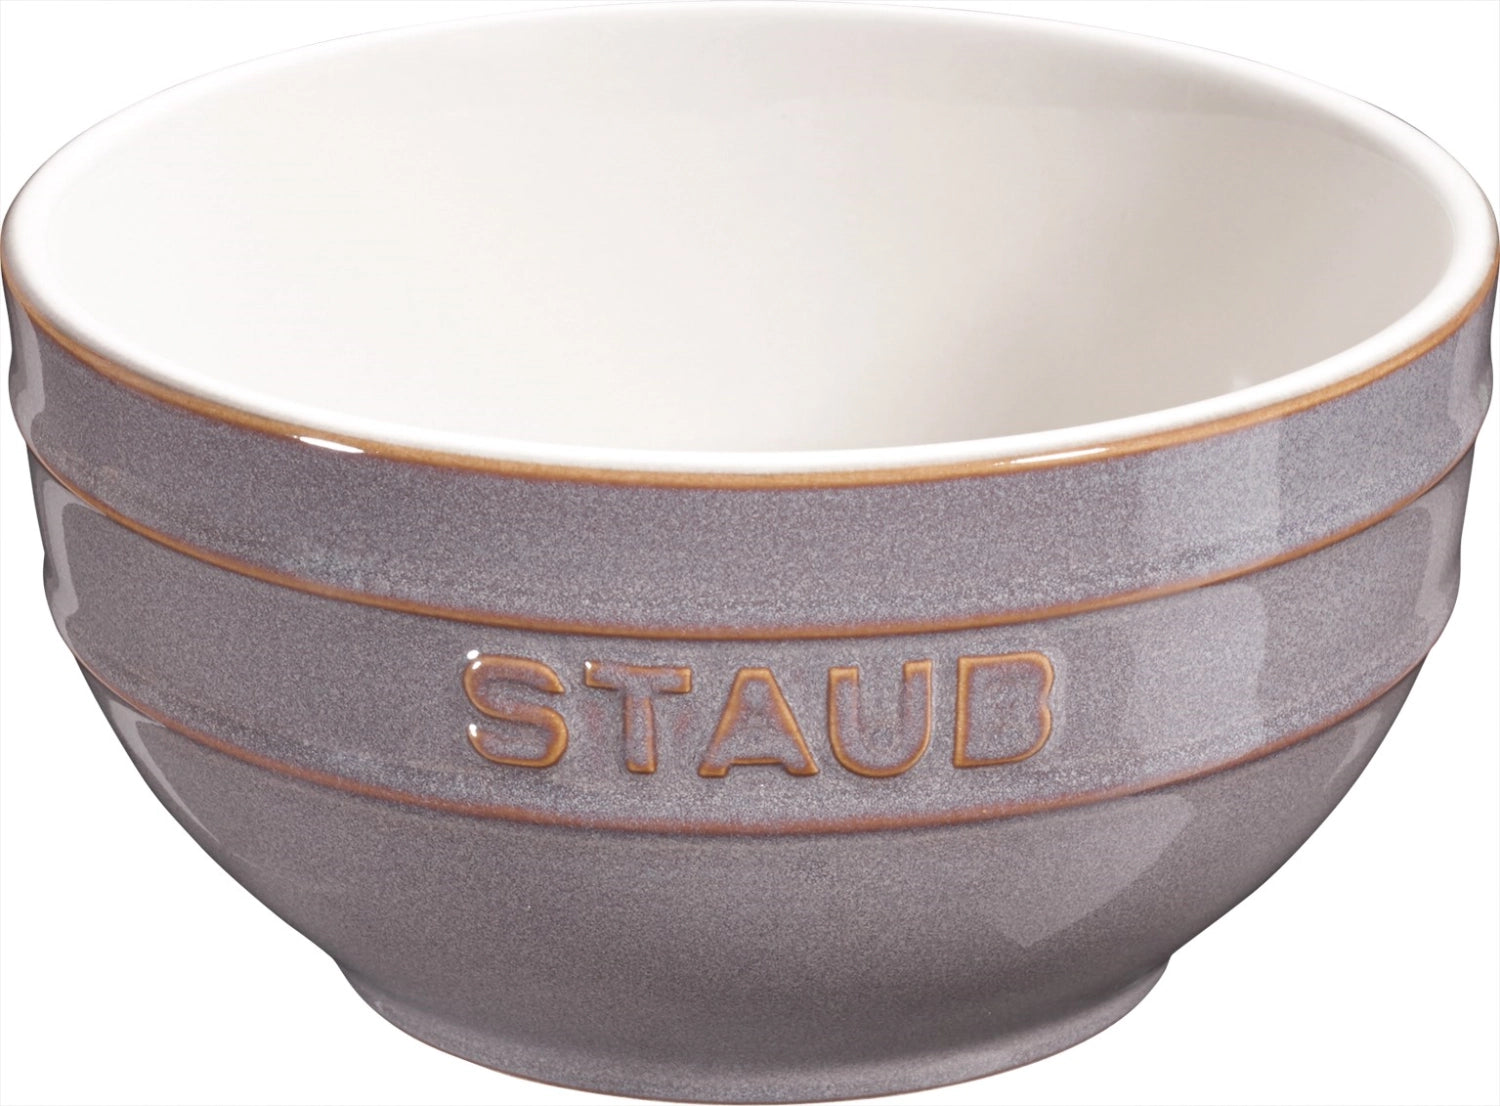 Keramik Schüssel klein, antik-grau, 12 cm - KAQTU Design